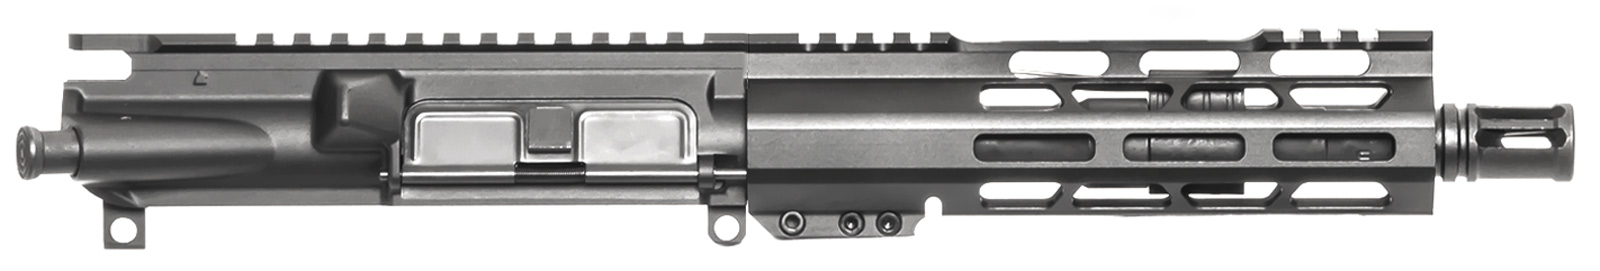 copy-of-ar-15-upper-assembly-16-multiple-calibers-15-hera-arms-keymod-unmarked-ar-15-handguard-rail